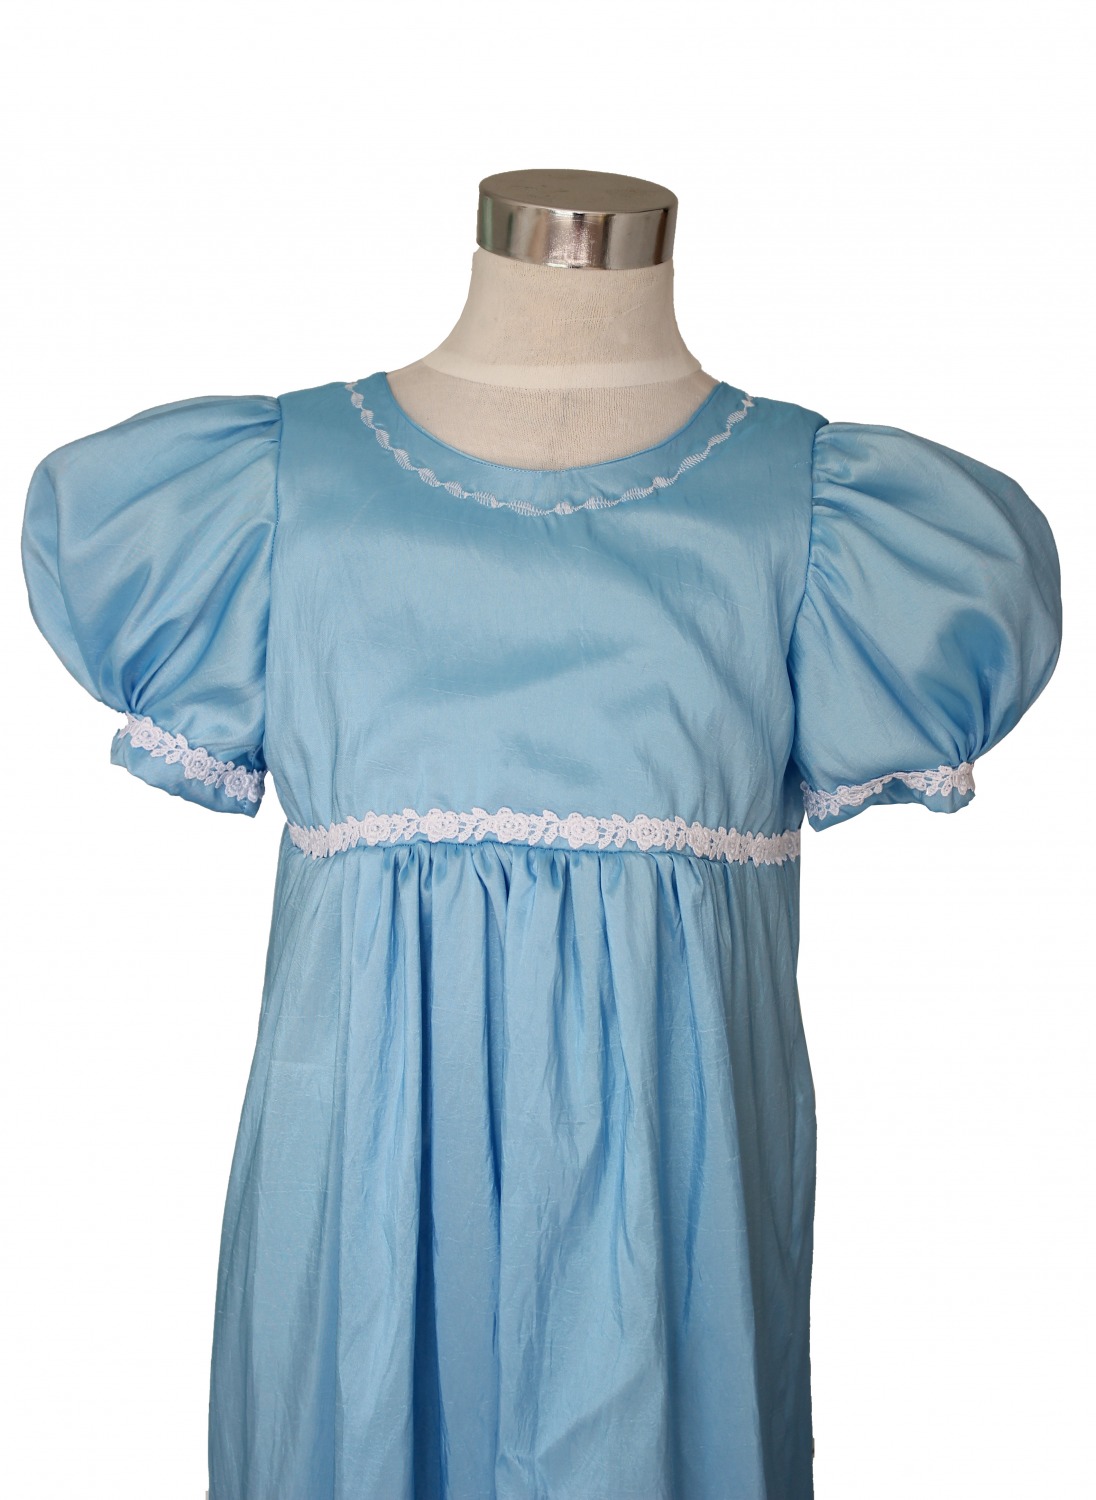 Girl's Regency Jane Austen Costume Age 10 - 11 Years  Image